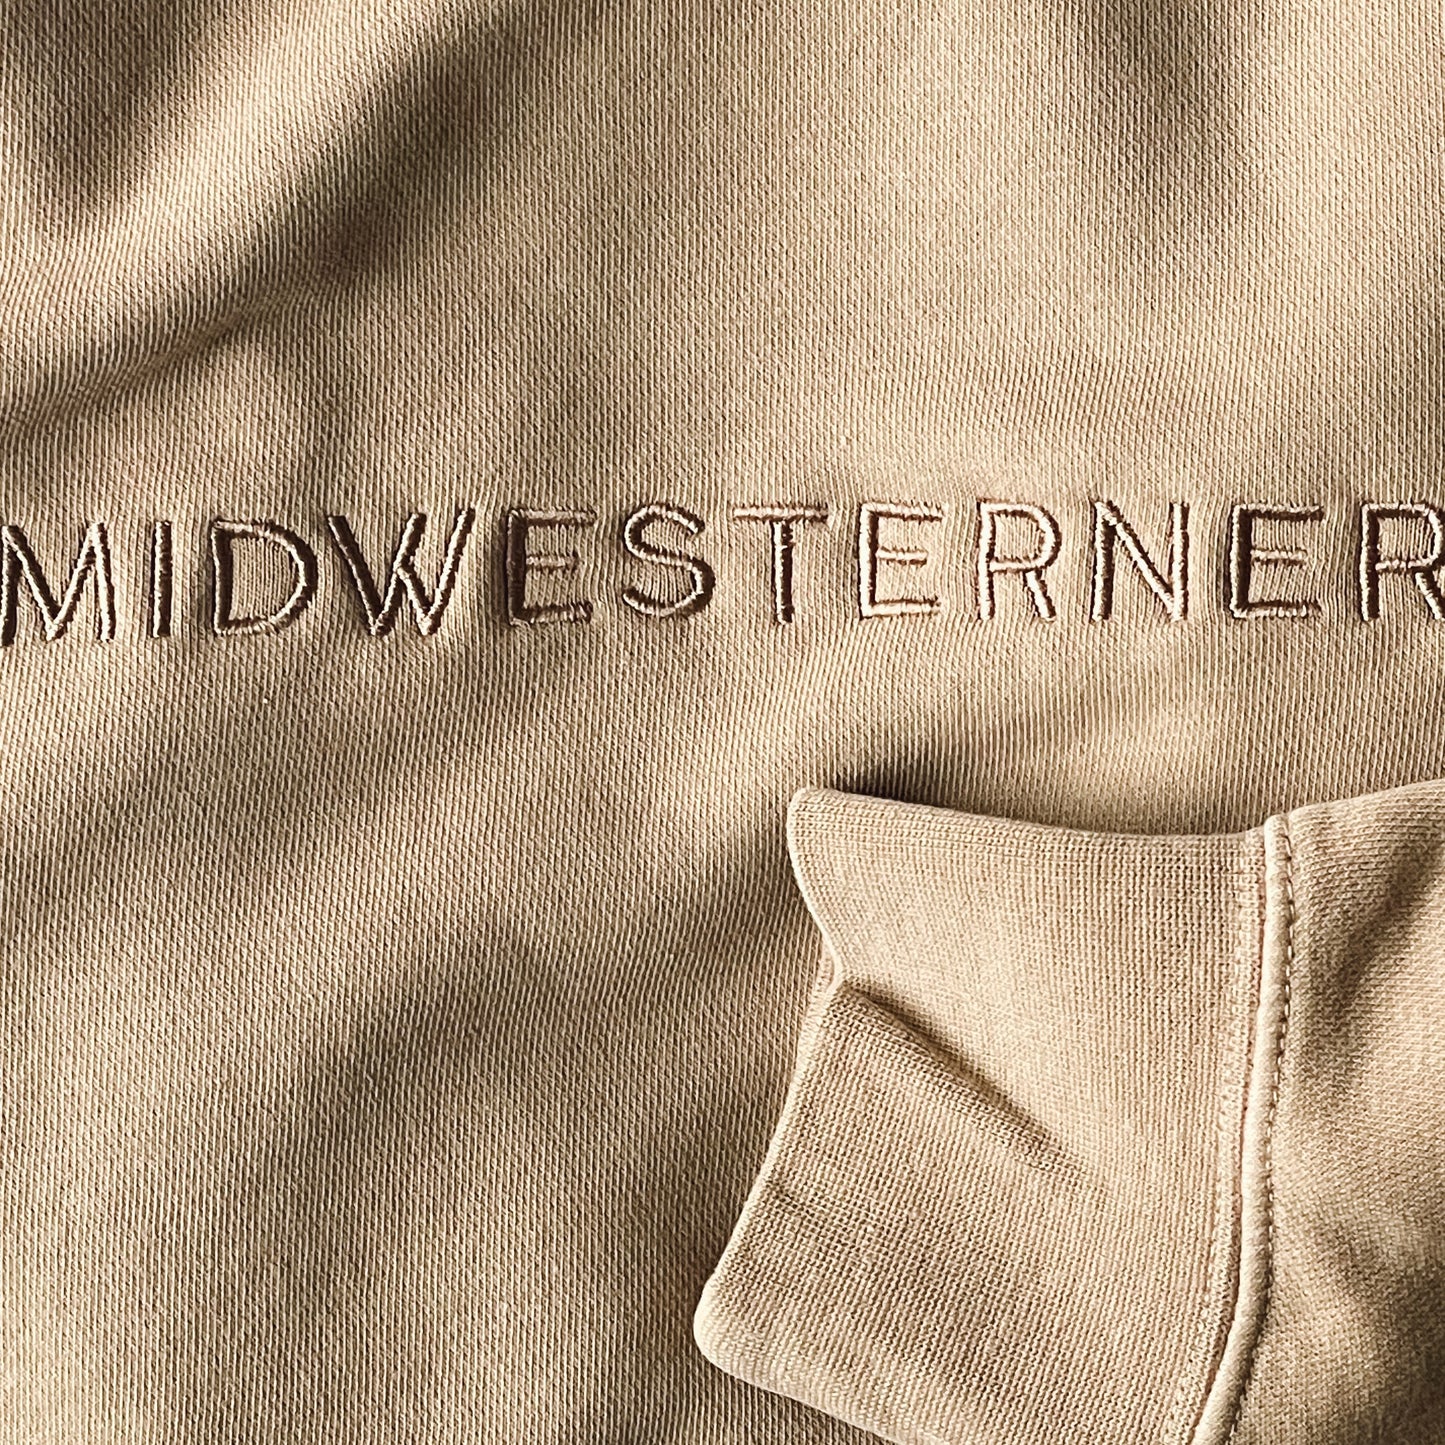 Midwesterner Embroidered Crewneck